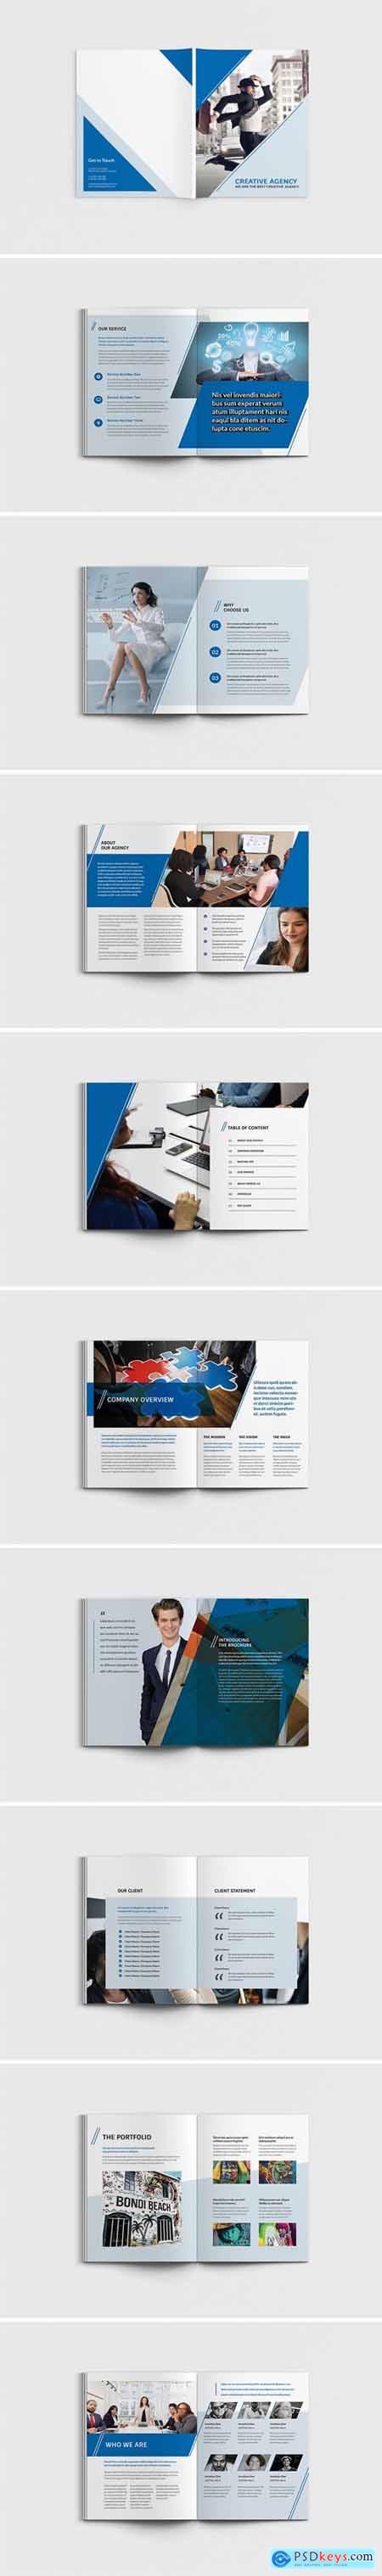 AgencyPro - A4 Agency Brochure Template